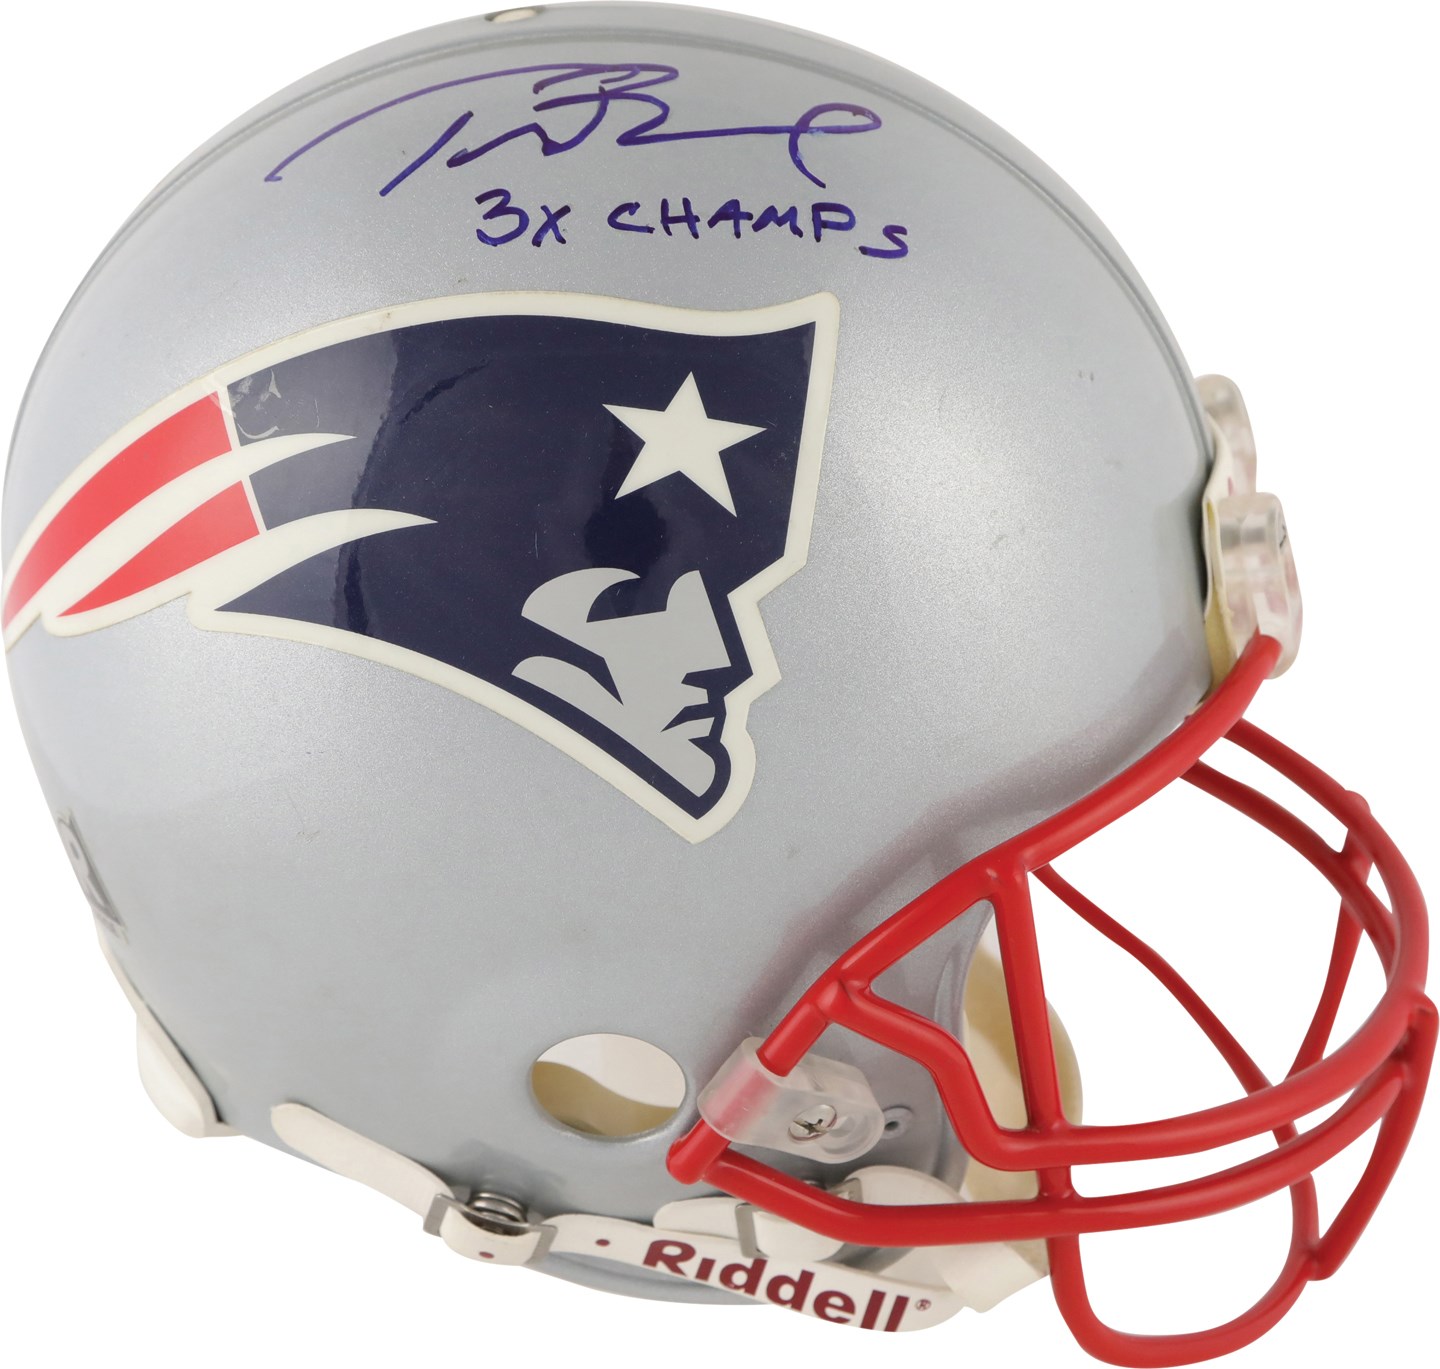 2005 Tom Brady "3x Champs" New England Patriots Signed Full Size Helmet (Tristar)